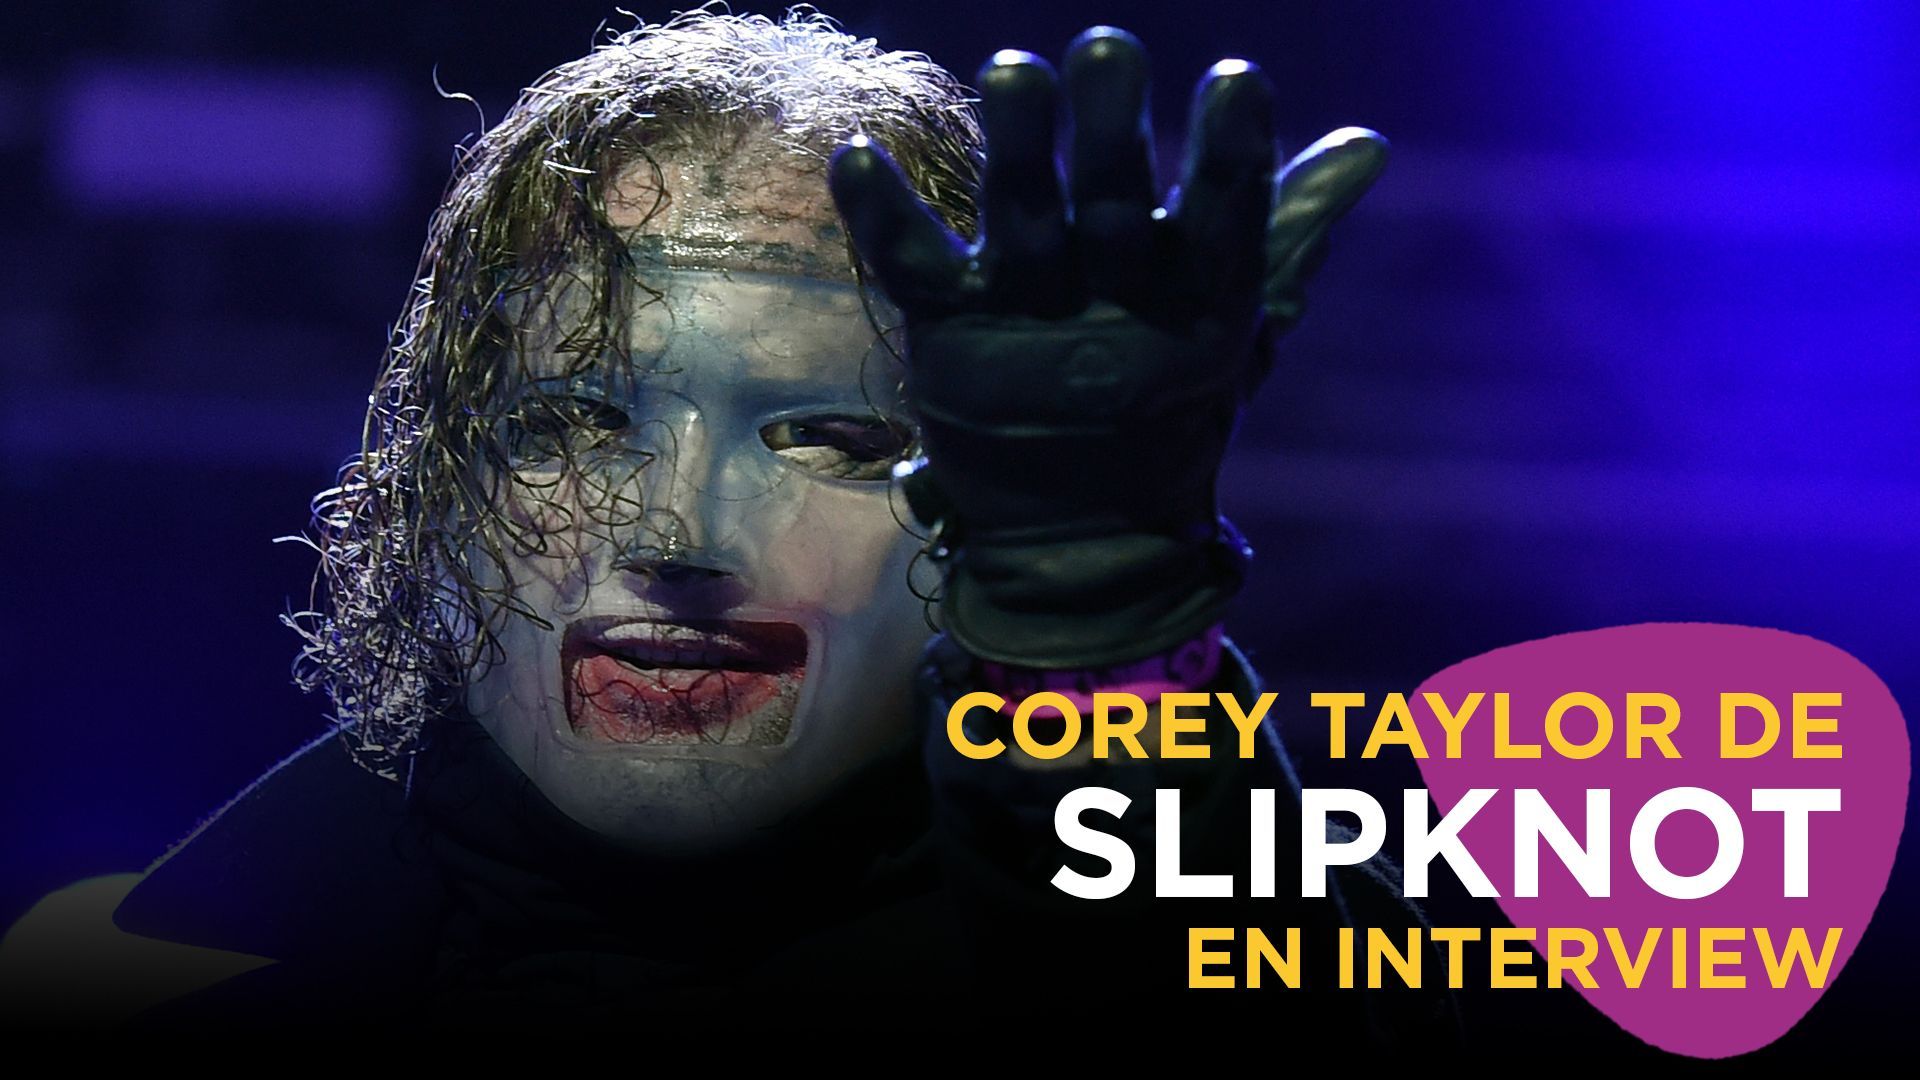 Corey Taylor de Slipknot en interview